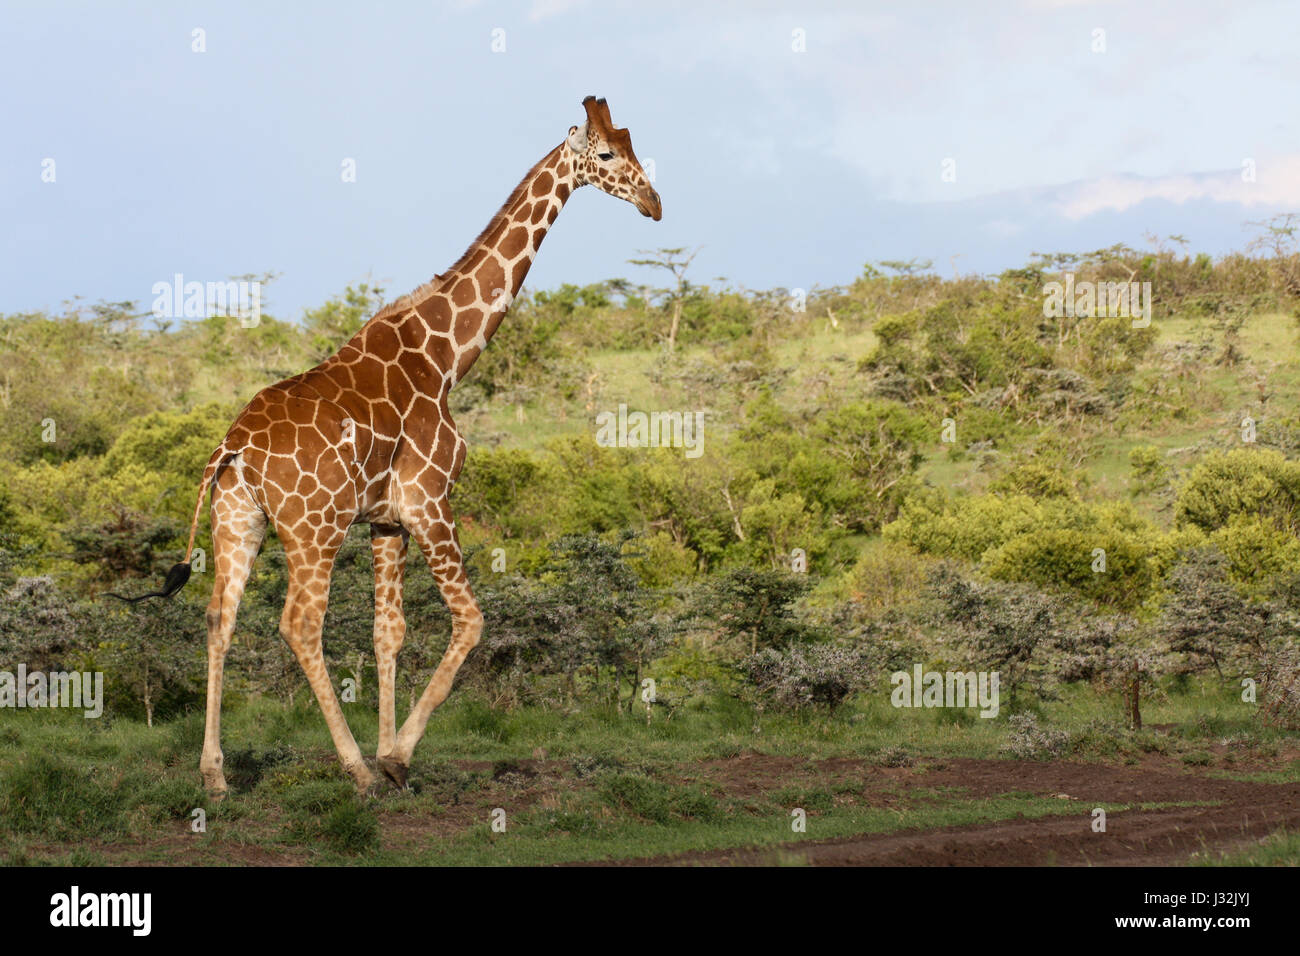 A reticulated giraffe (Giraffa camelopardalis) walks among green bushes. Ol Pejeta Conservancy, Kenya. Stock Photo